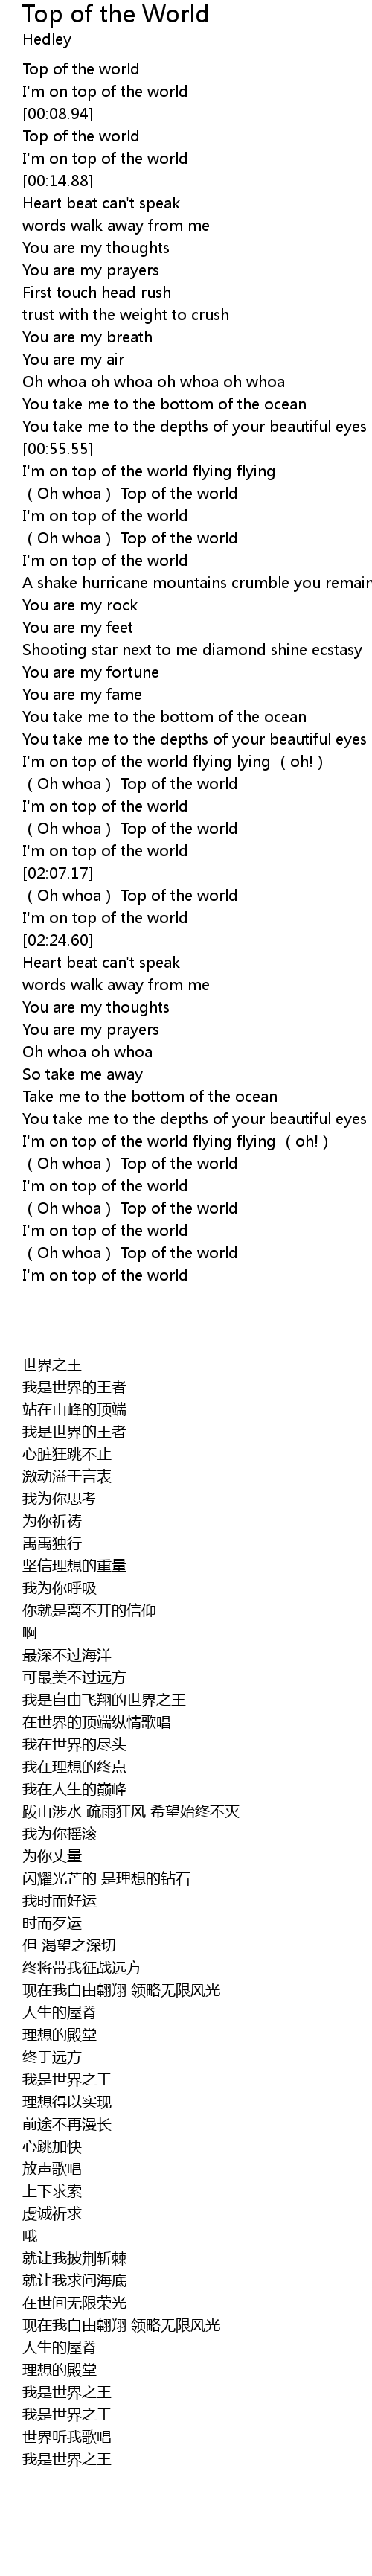 Top Of The World Lyrics Follow Lyrics